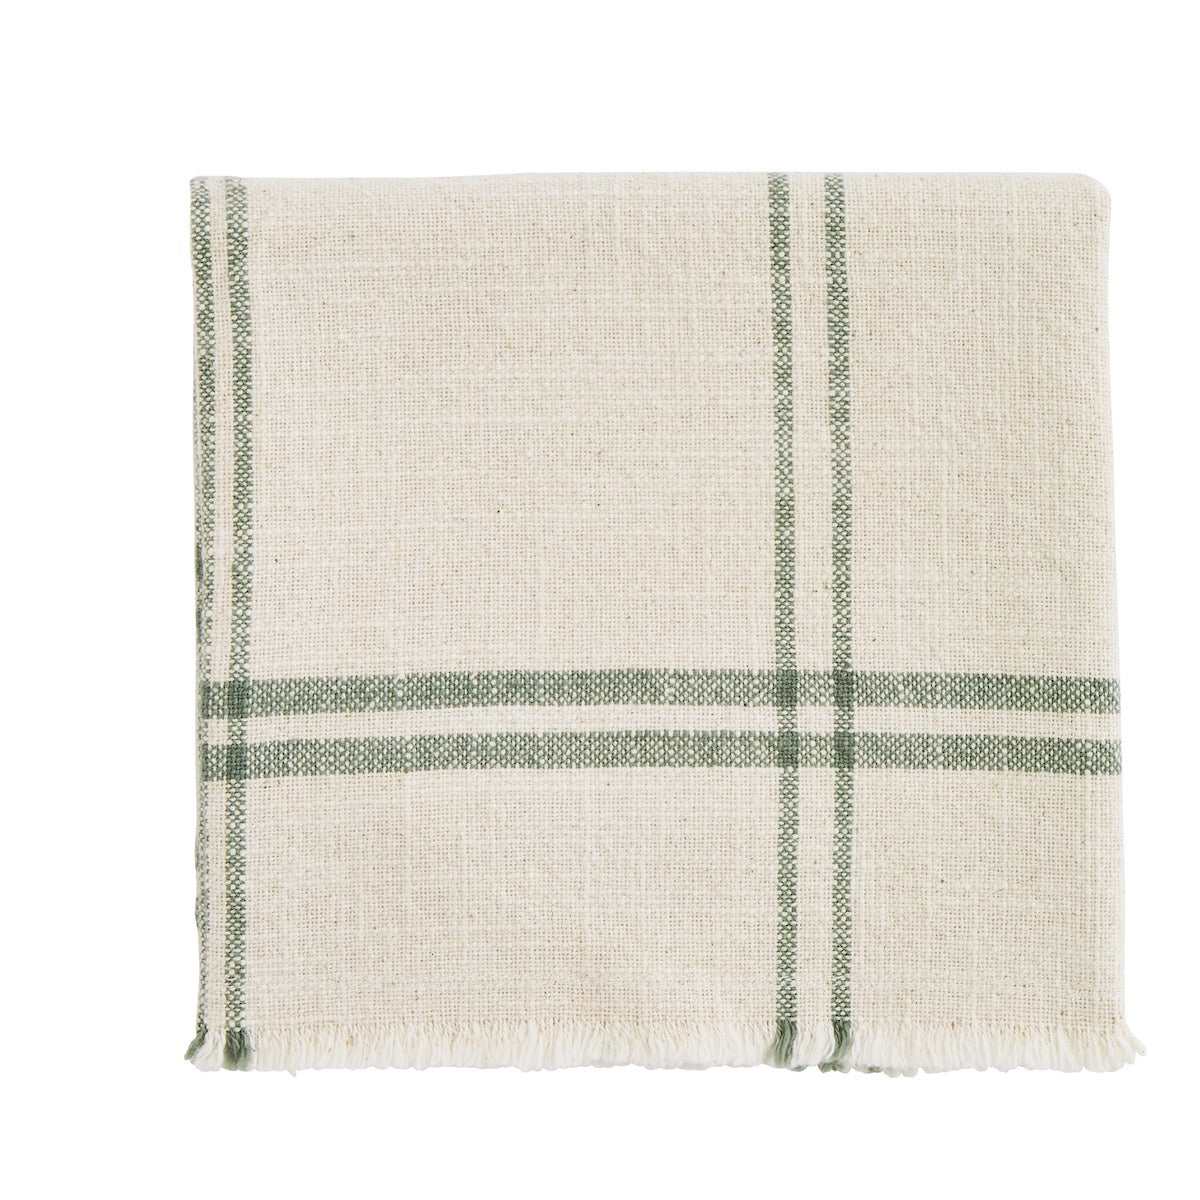 Checked Ecru & Green Kitchen Towel W/Fringes